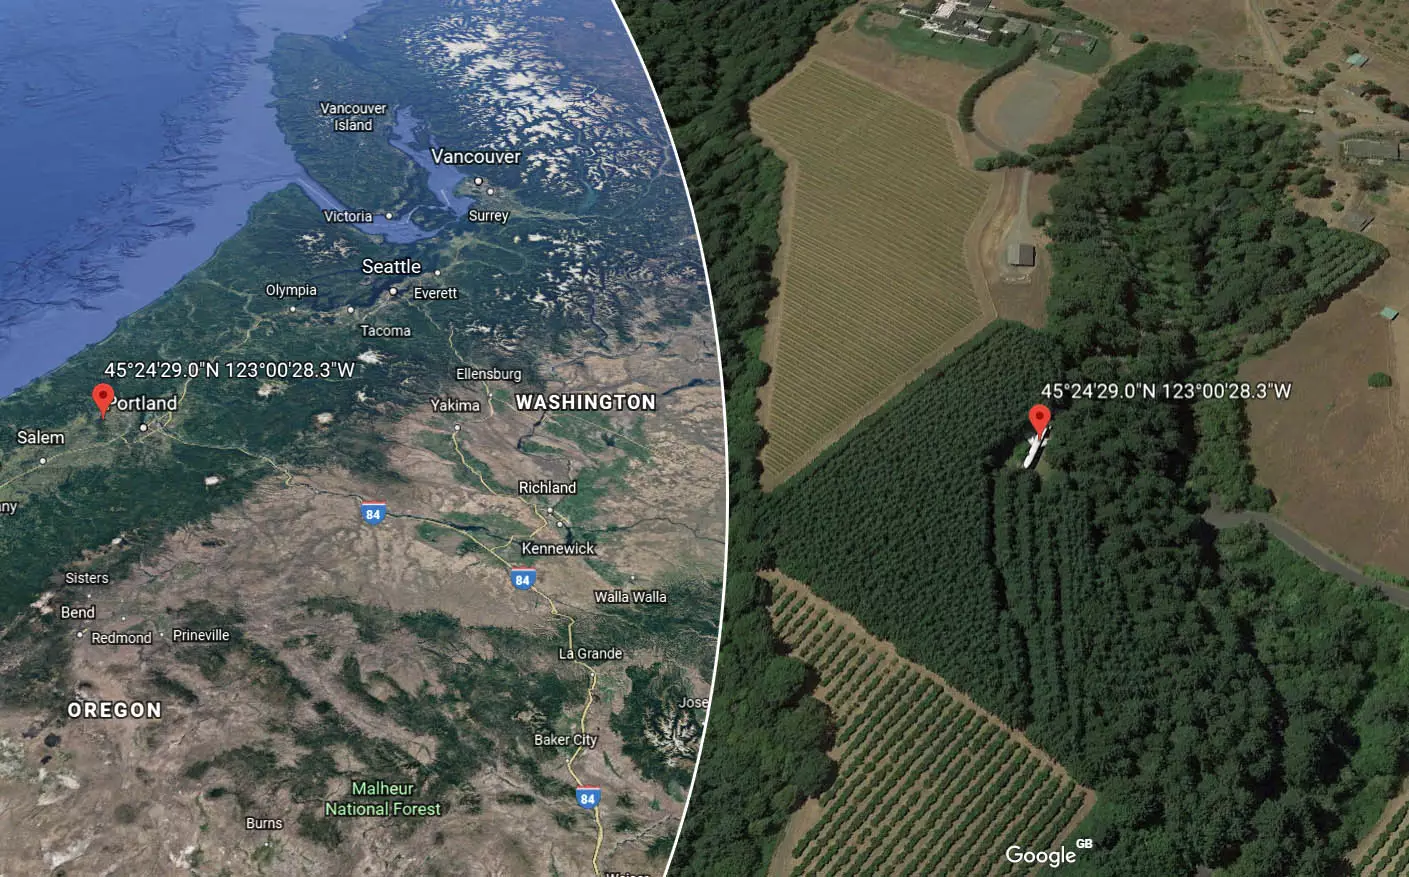 The Plane Is Seen Near Oregon, USA on Google Earth.